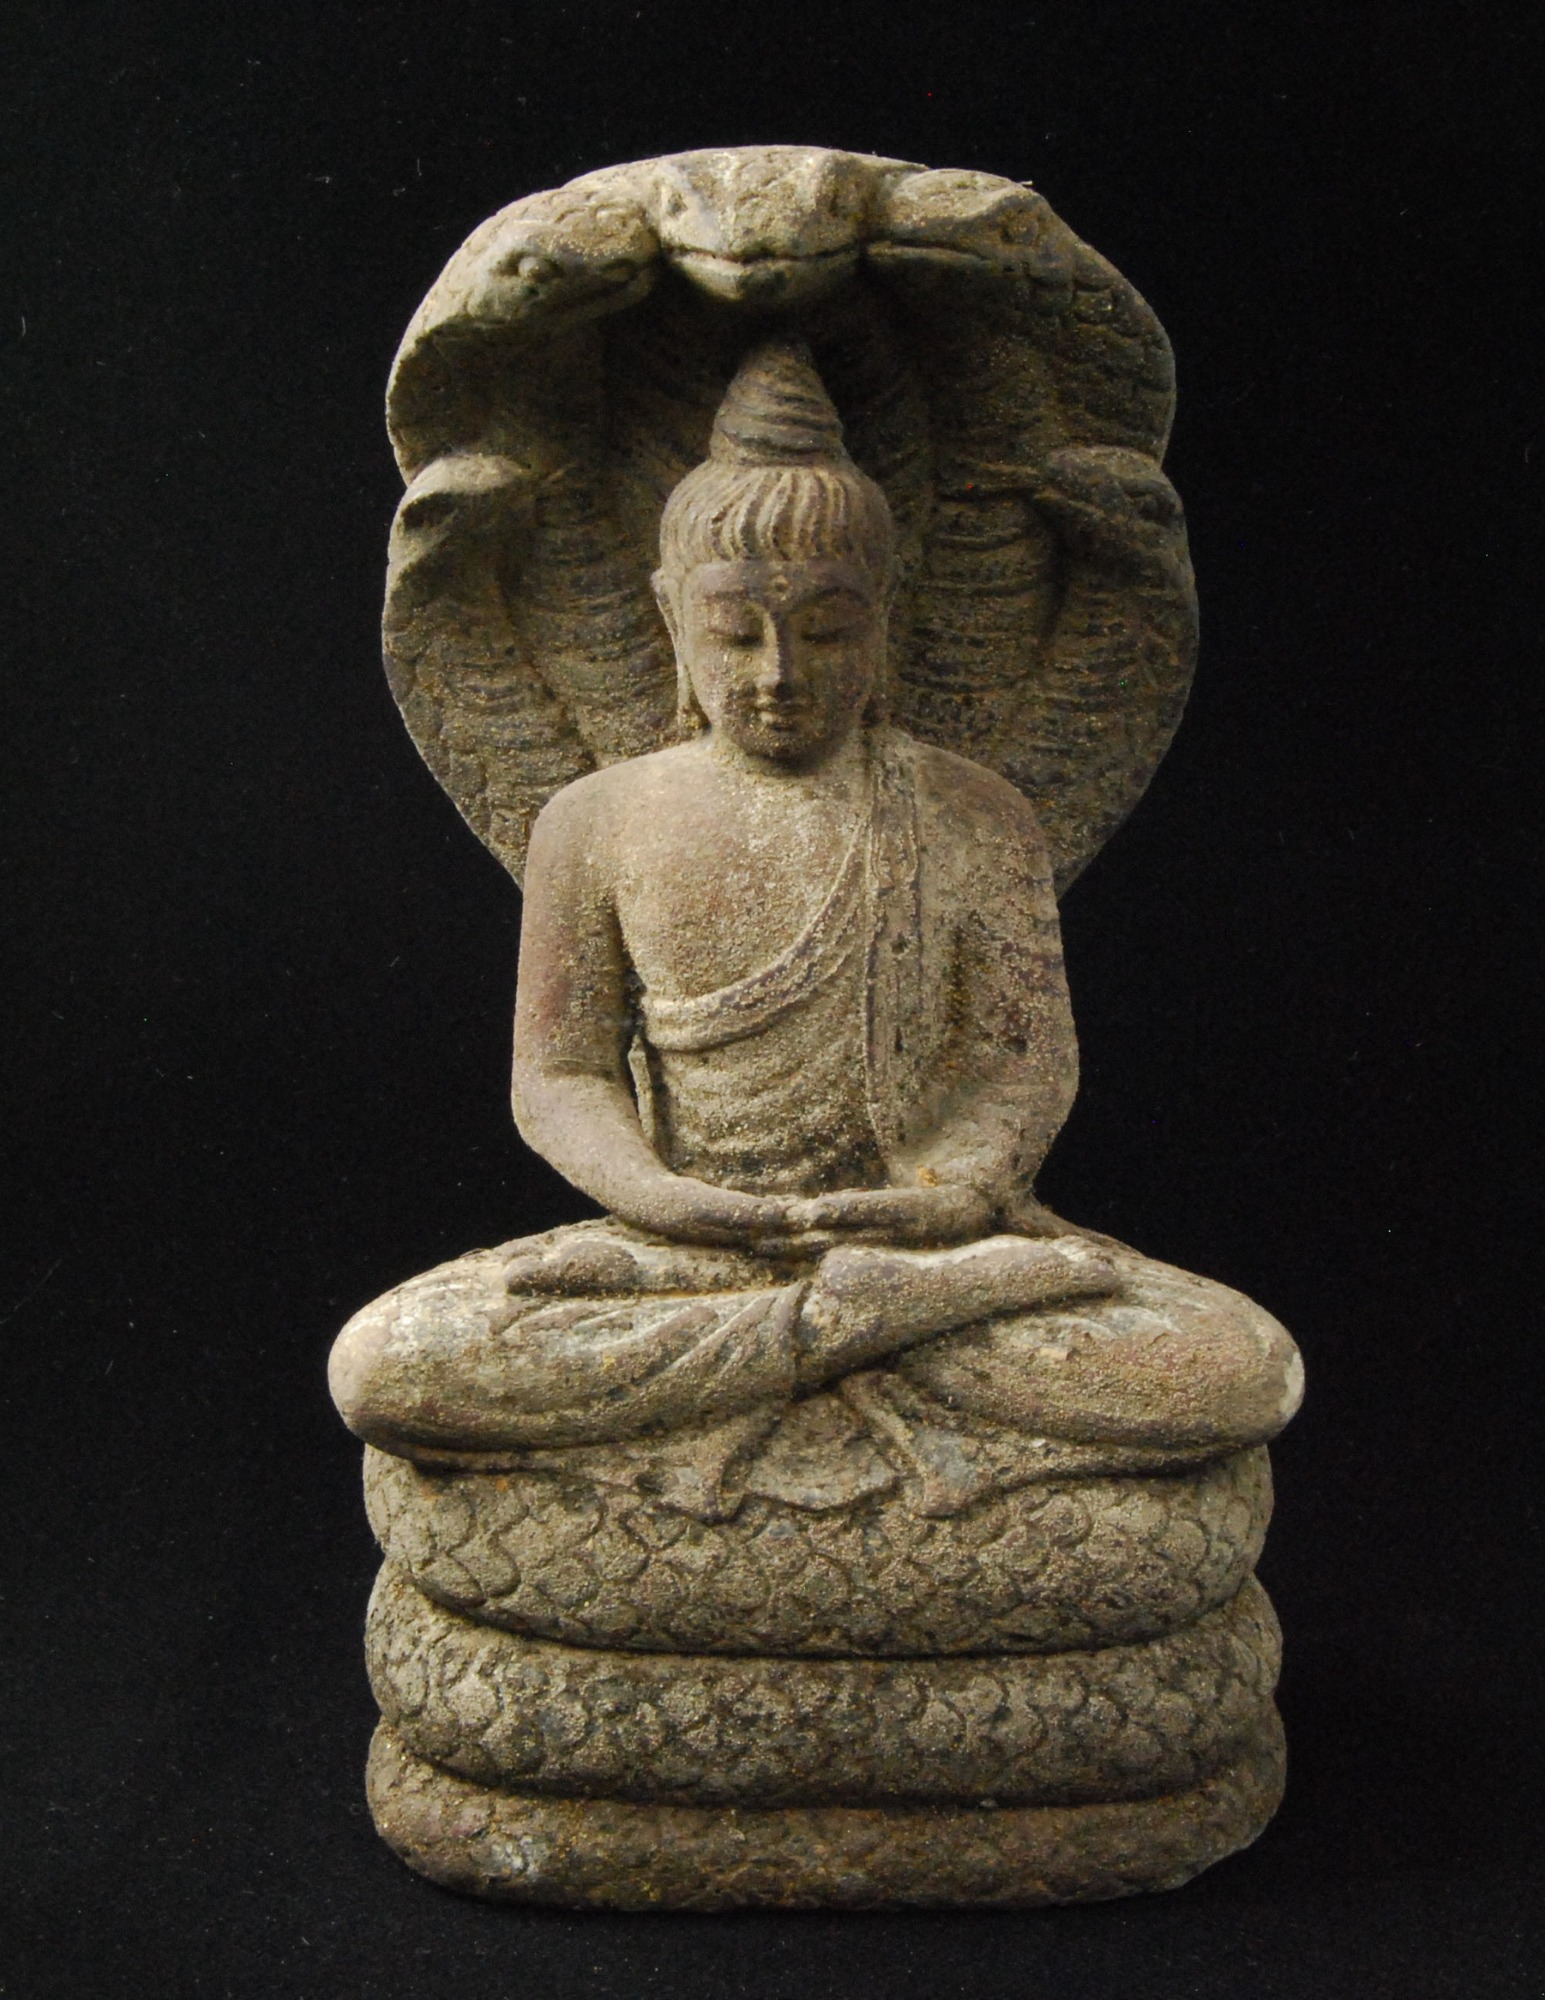 Sculpture figure in lotus pose with cobra hood behind the figure